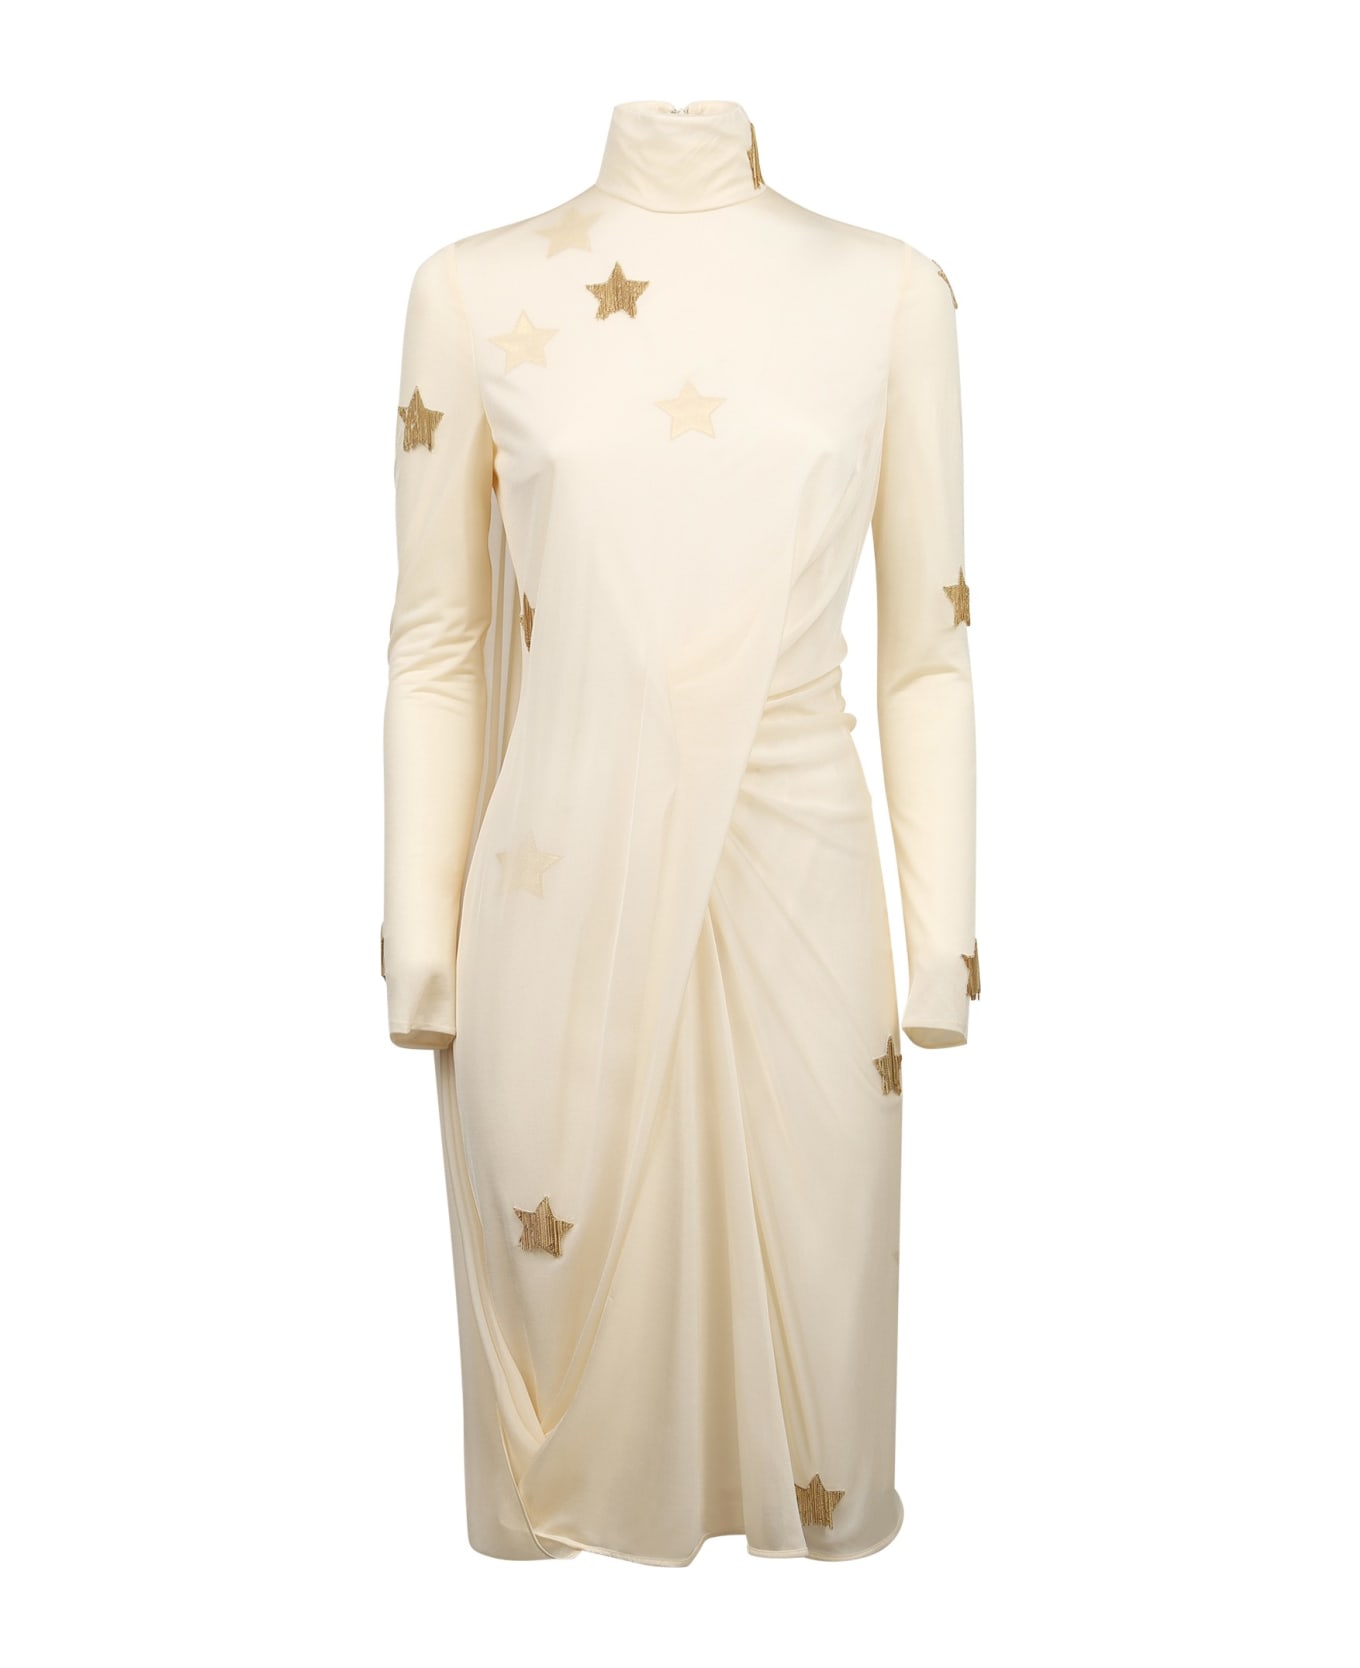 Burberry Star-pattern Dress - White